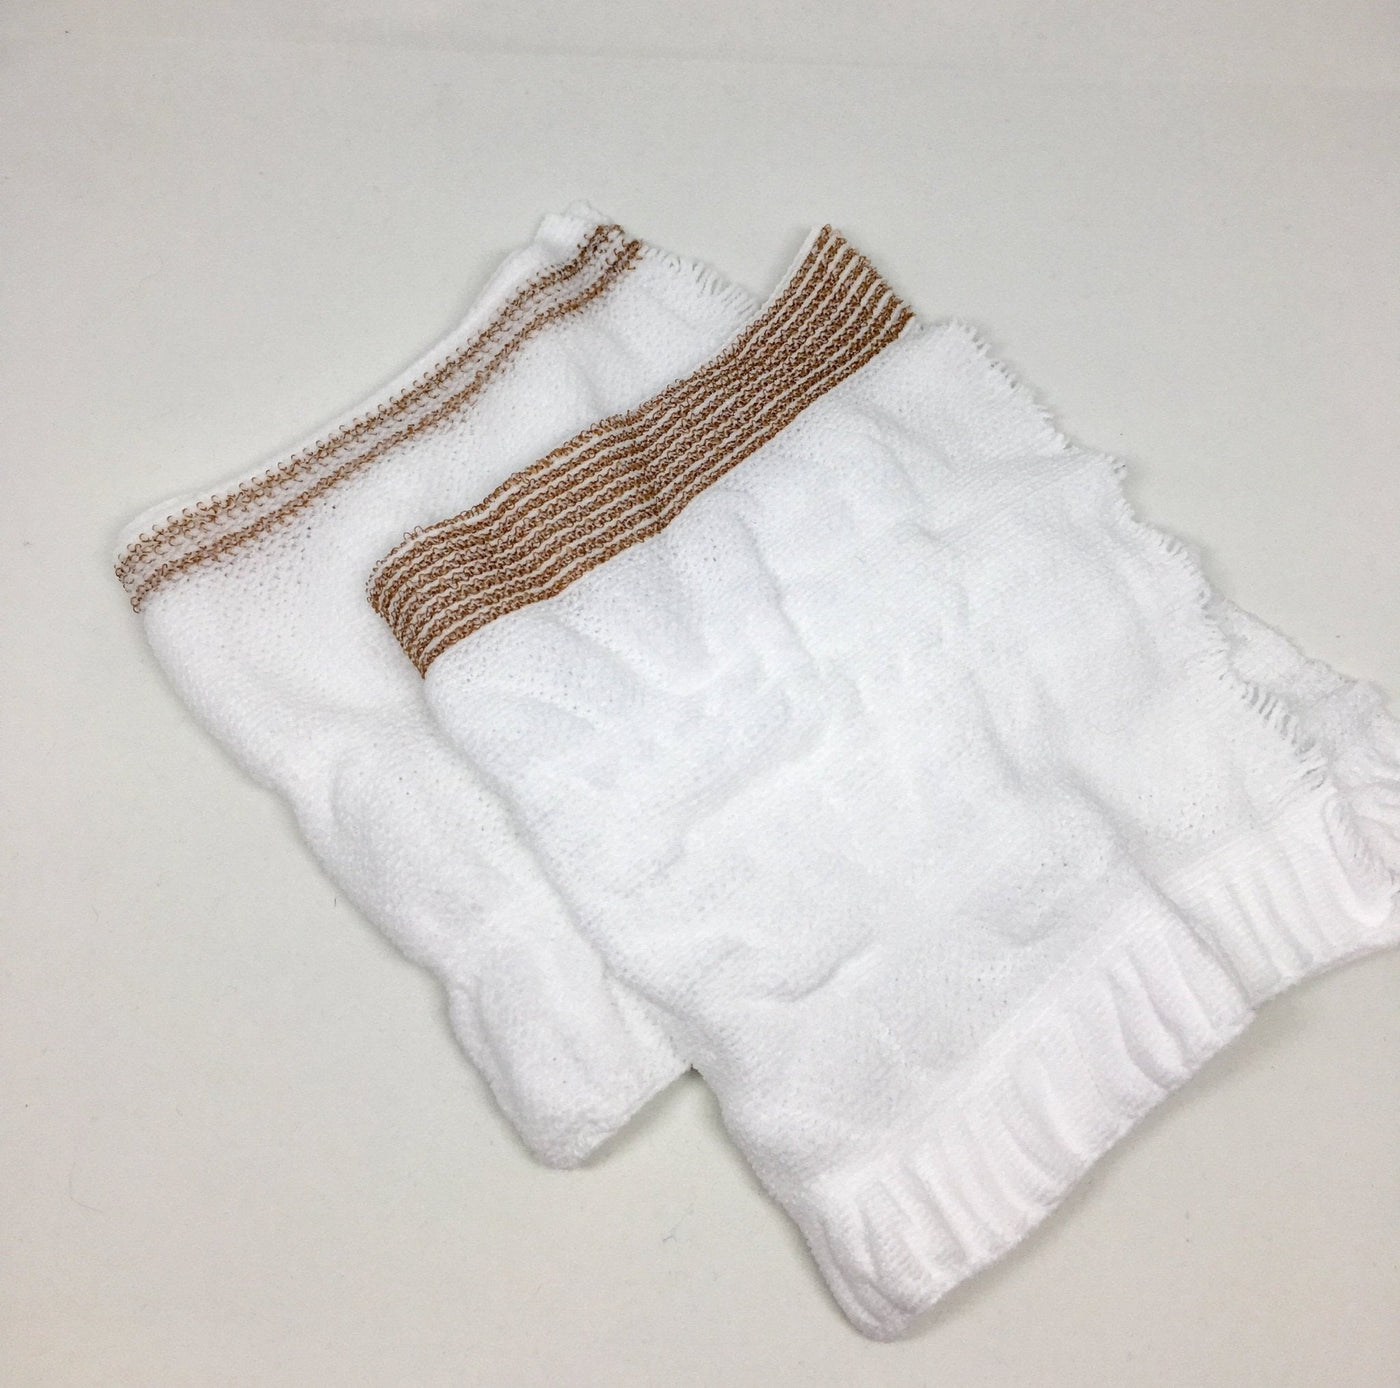 Mesh Panties Postpartum Disposable Mesh Postpartum Underwear Hospital Mesh  Underwear, White-8pcs, 2X-Large (Pack of 8)